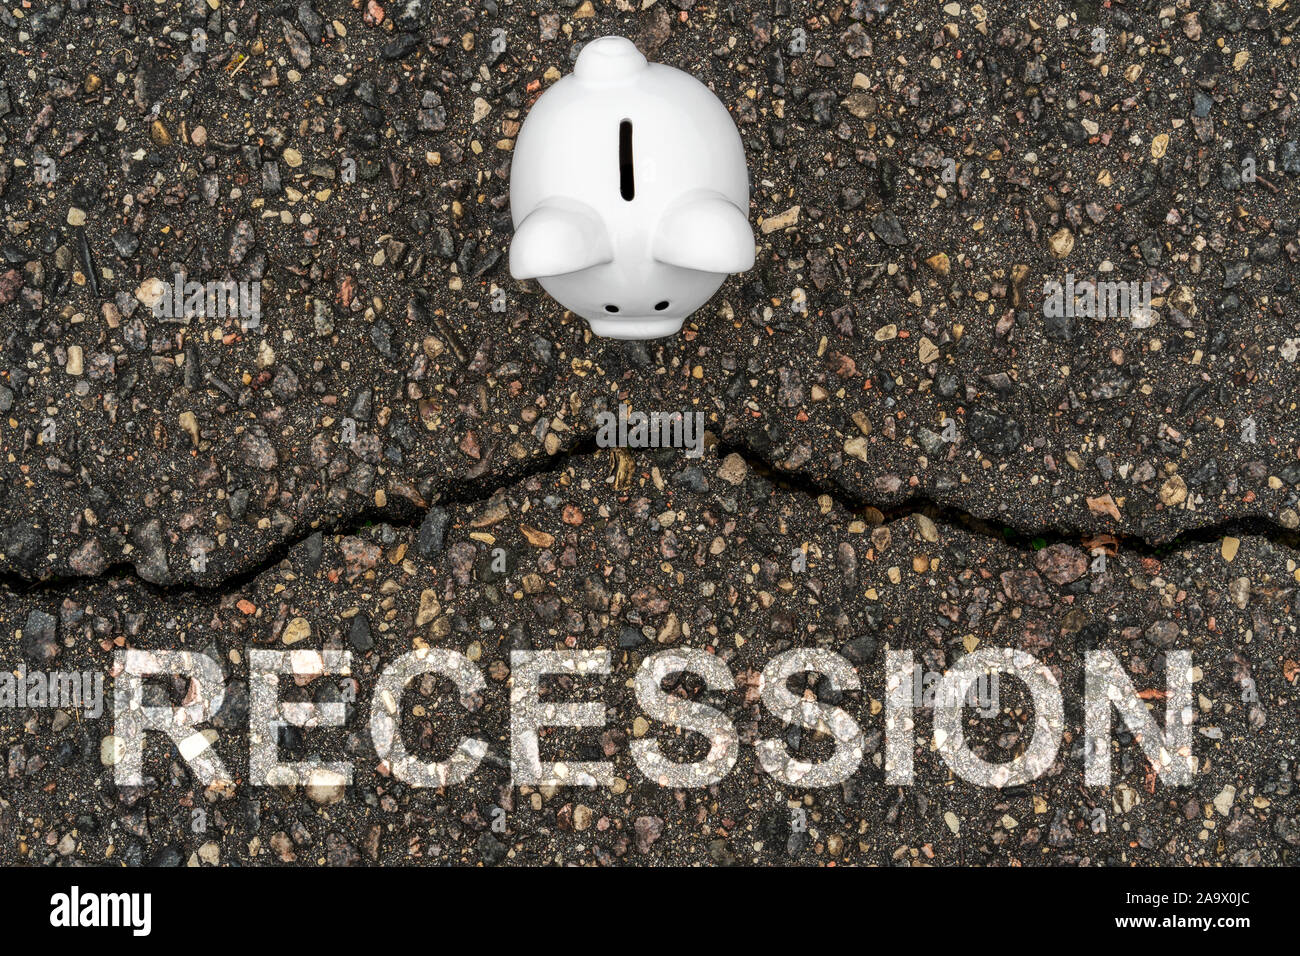 Concept financial recession, economic depression, crash financial. Piggy bank standing near the crack in asphalt Stock Photo